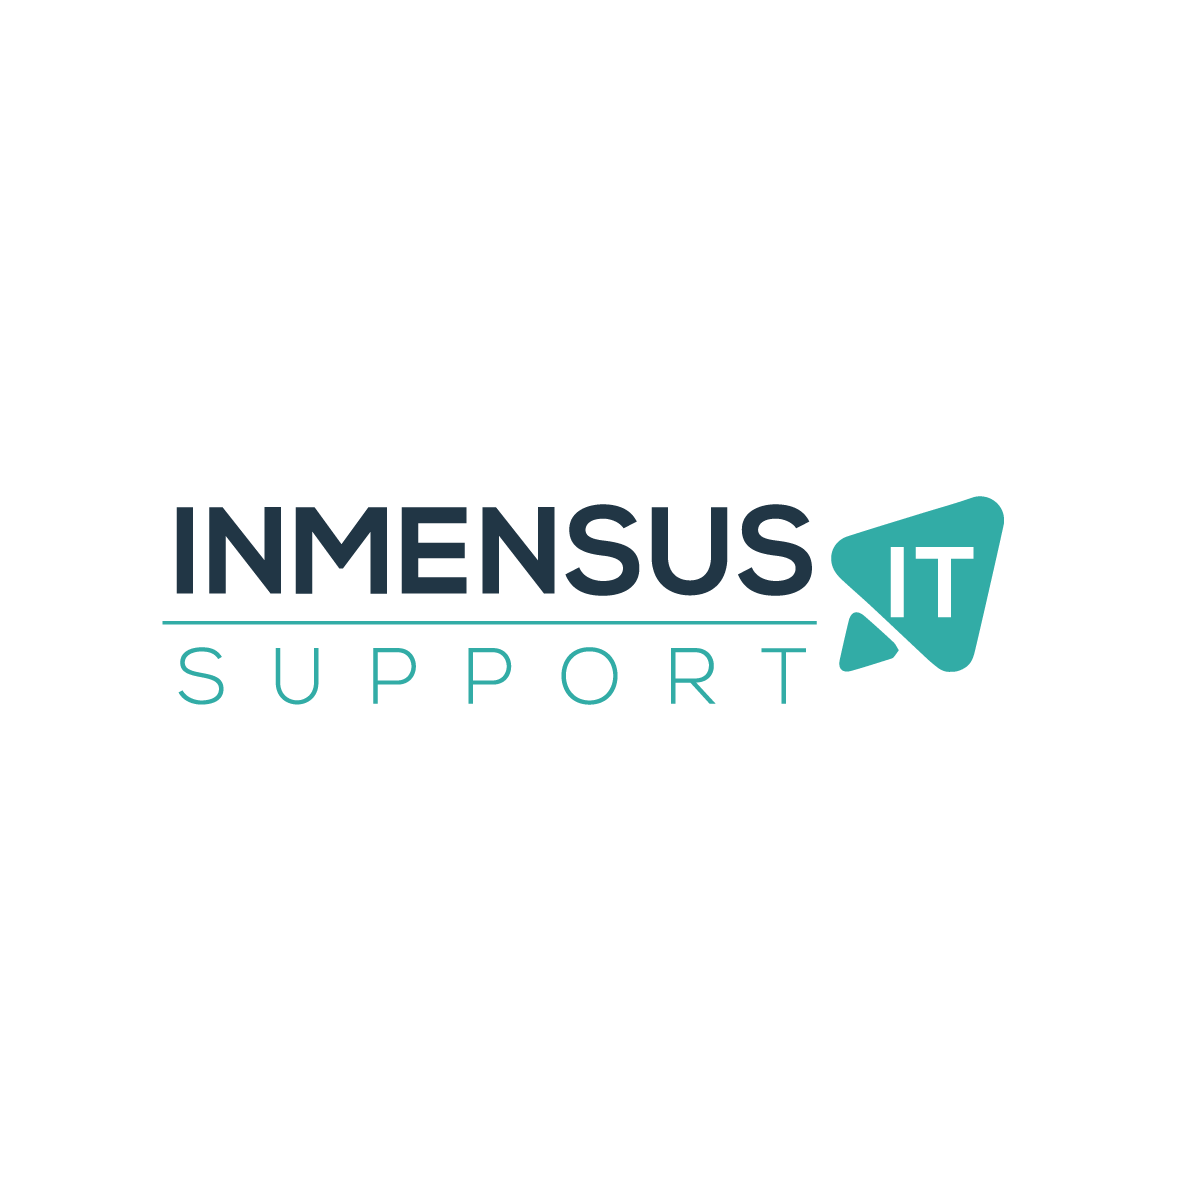 Inmensus IT Support